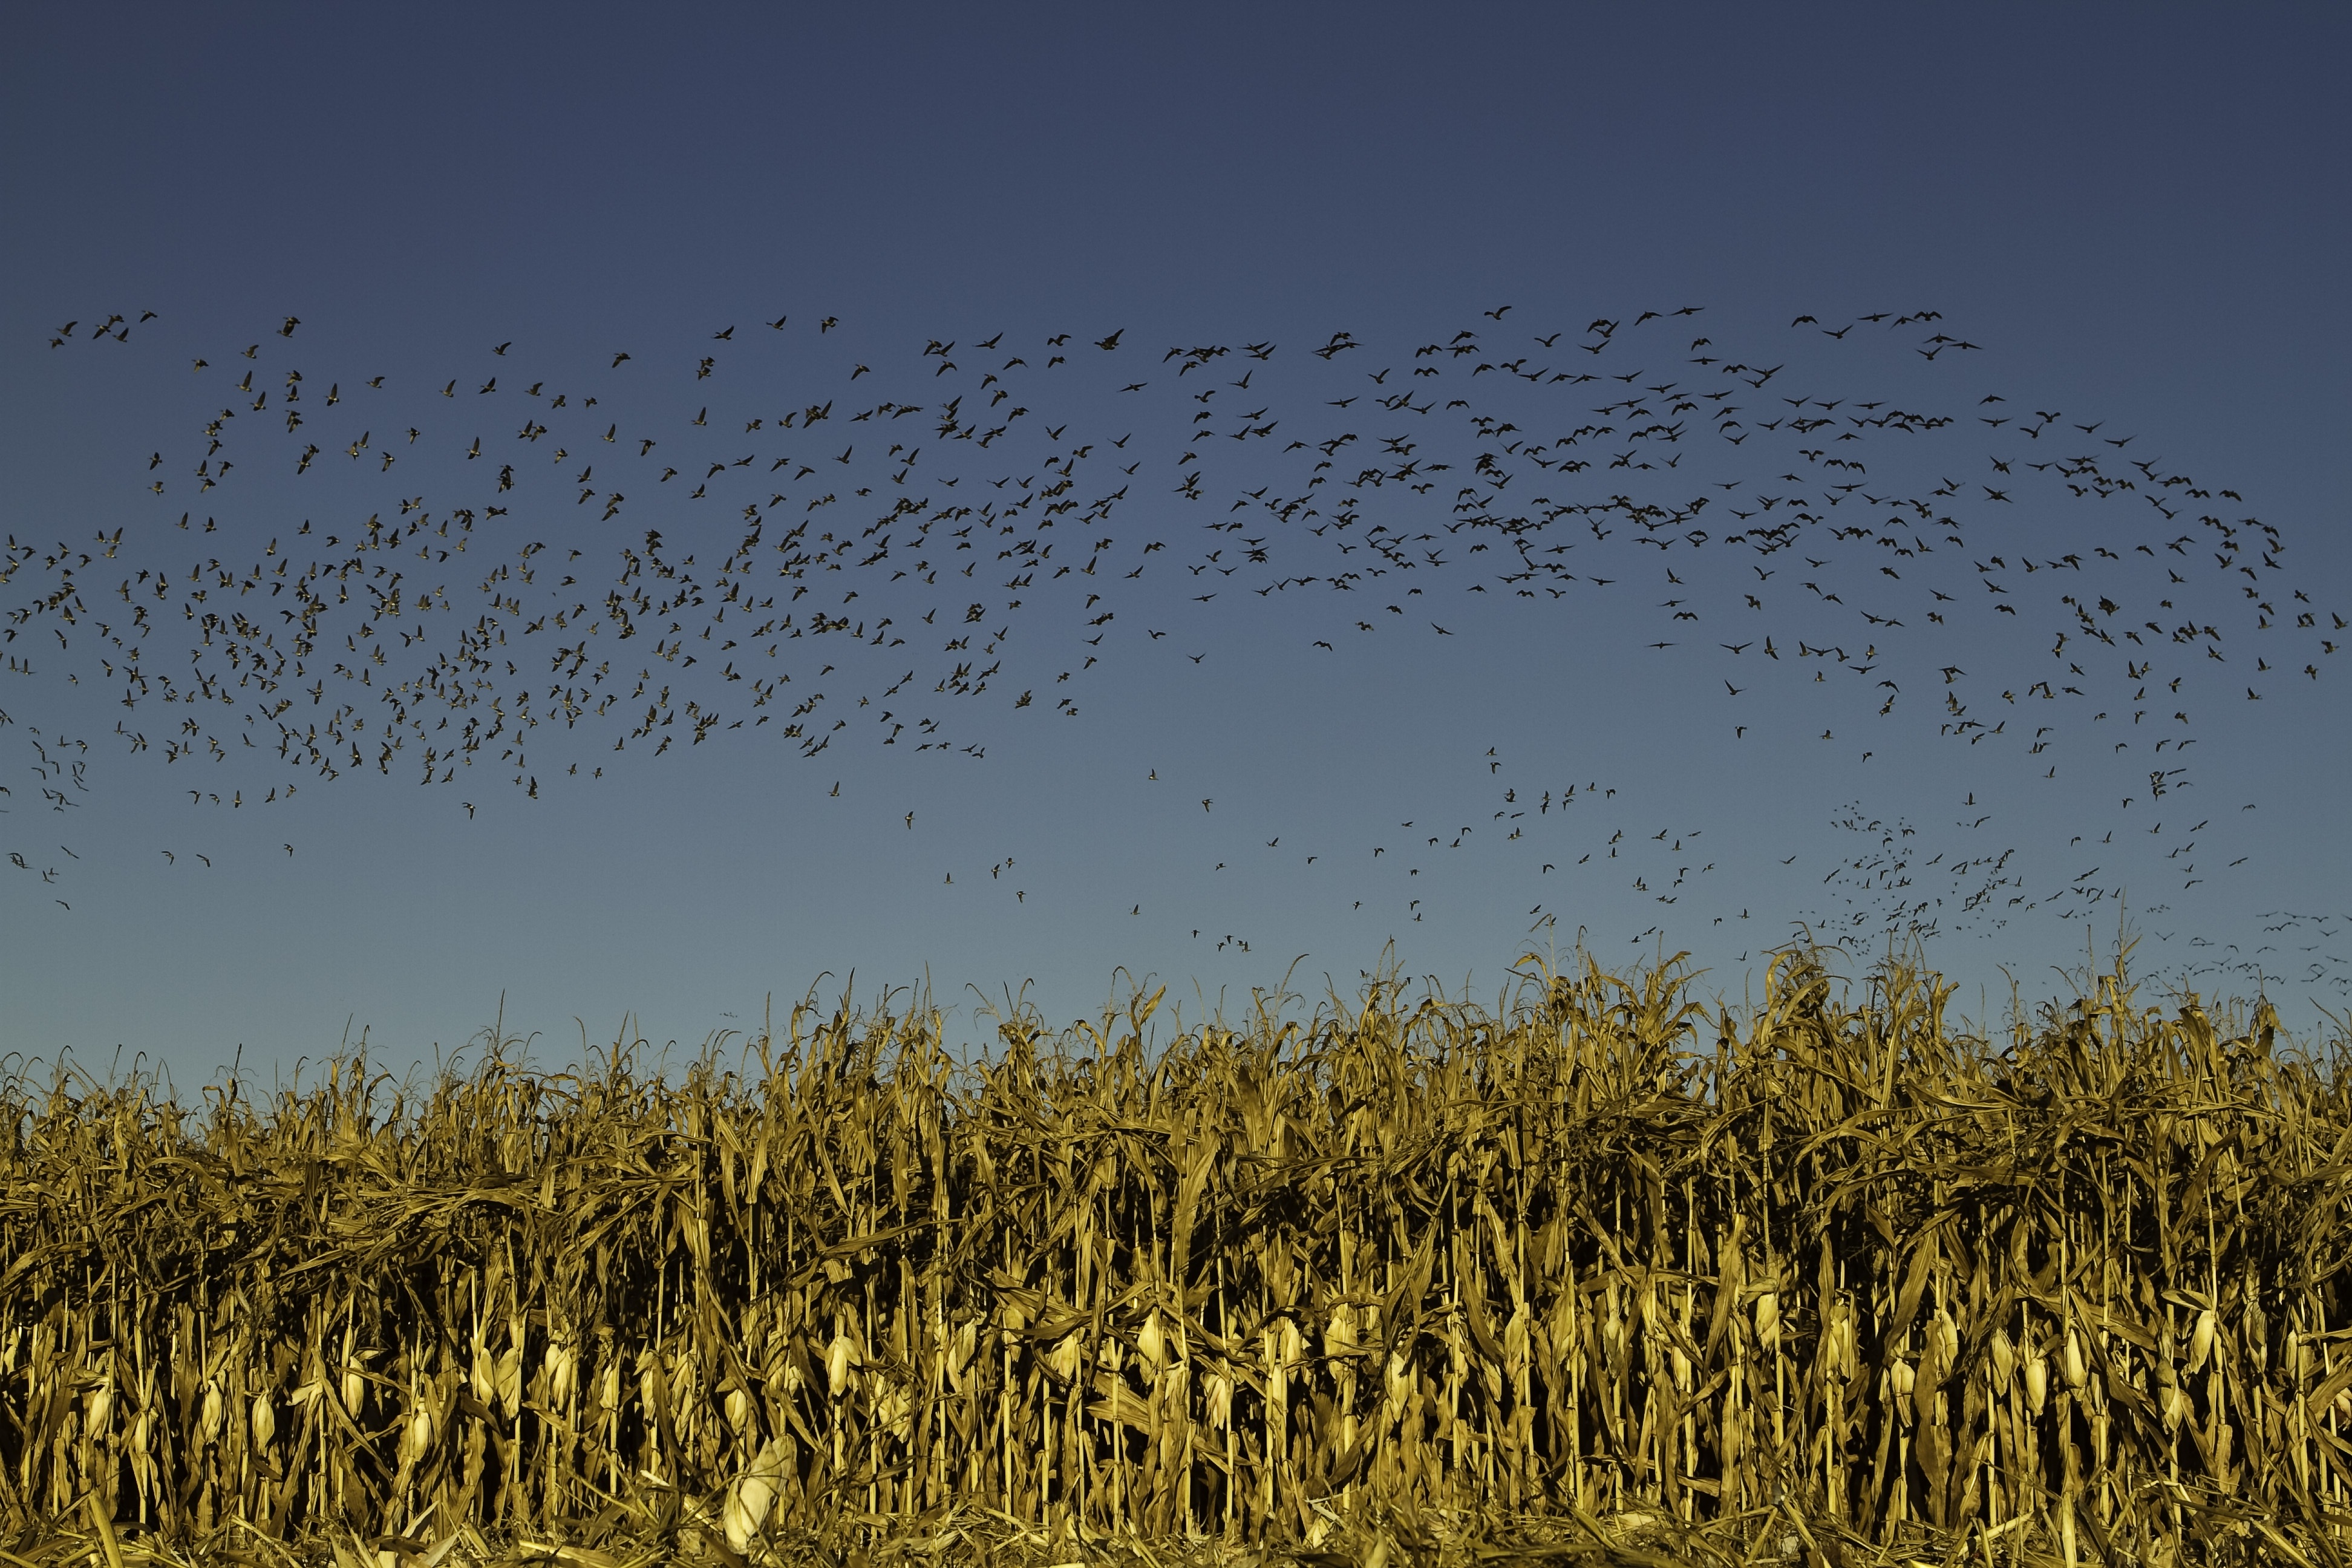 A flock of migratory birds flies over a cornfield.